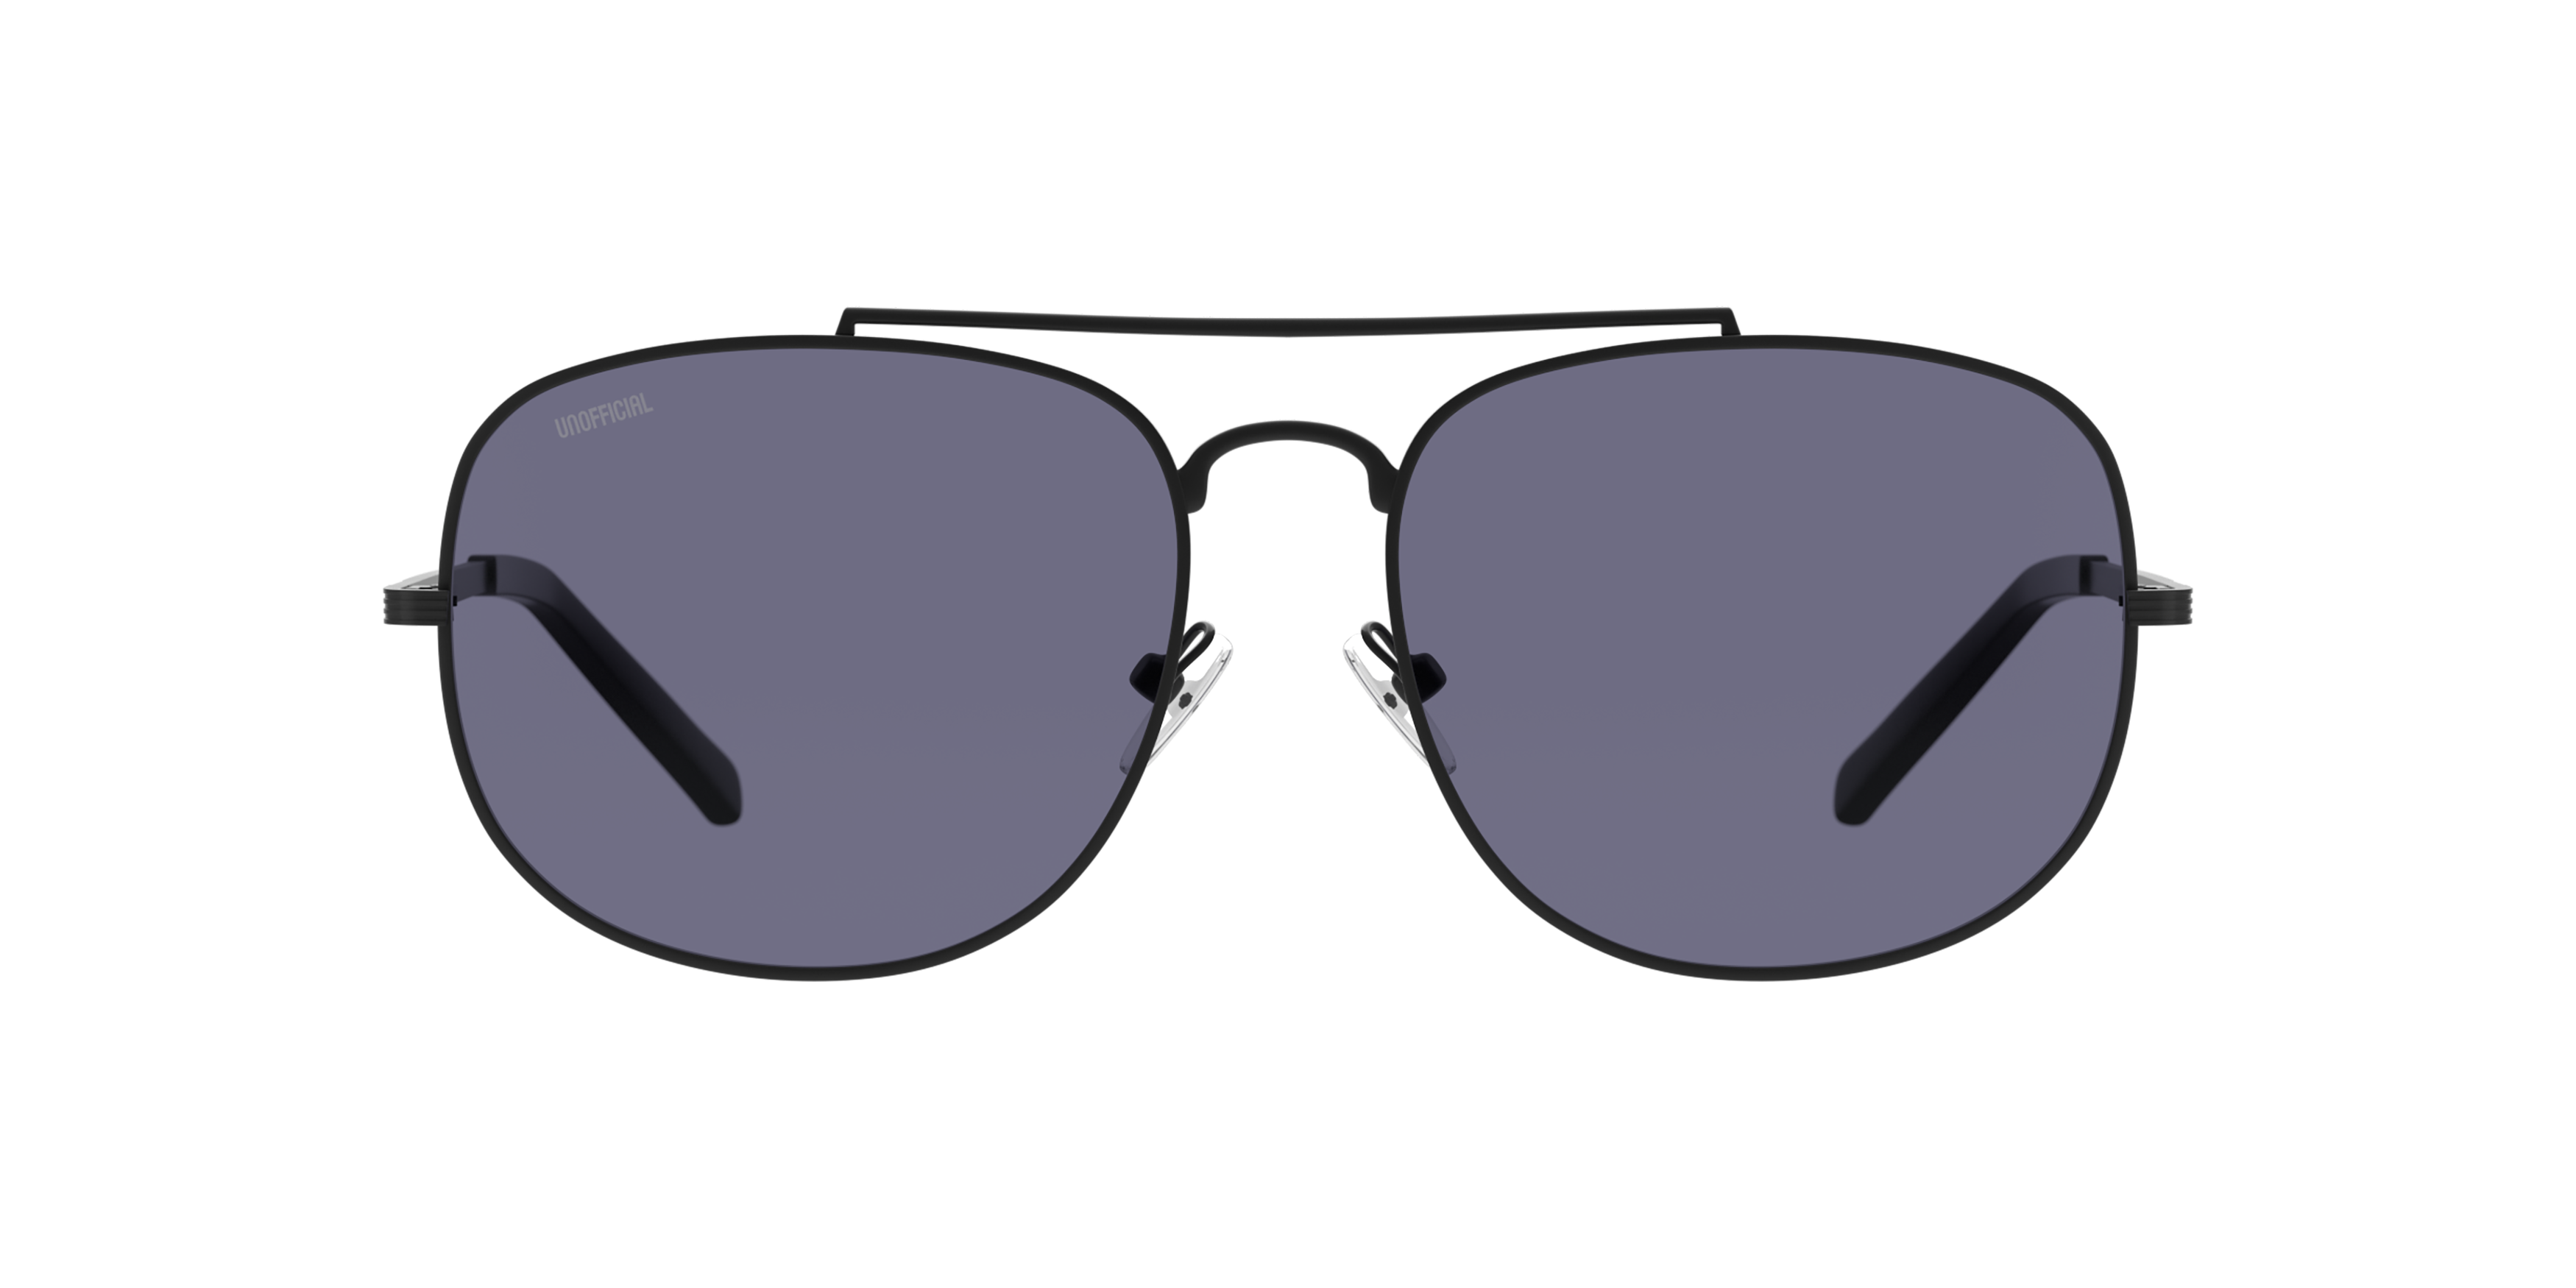 Front Unofficial UNSM0099 Sunglasses Grey / Black